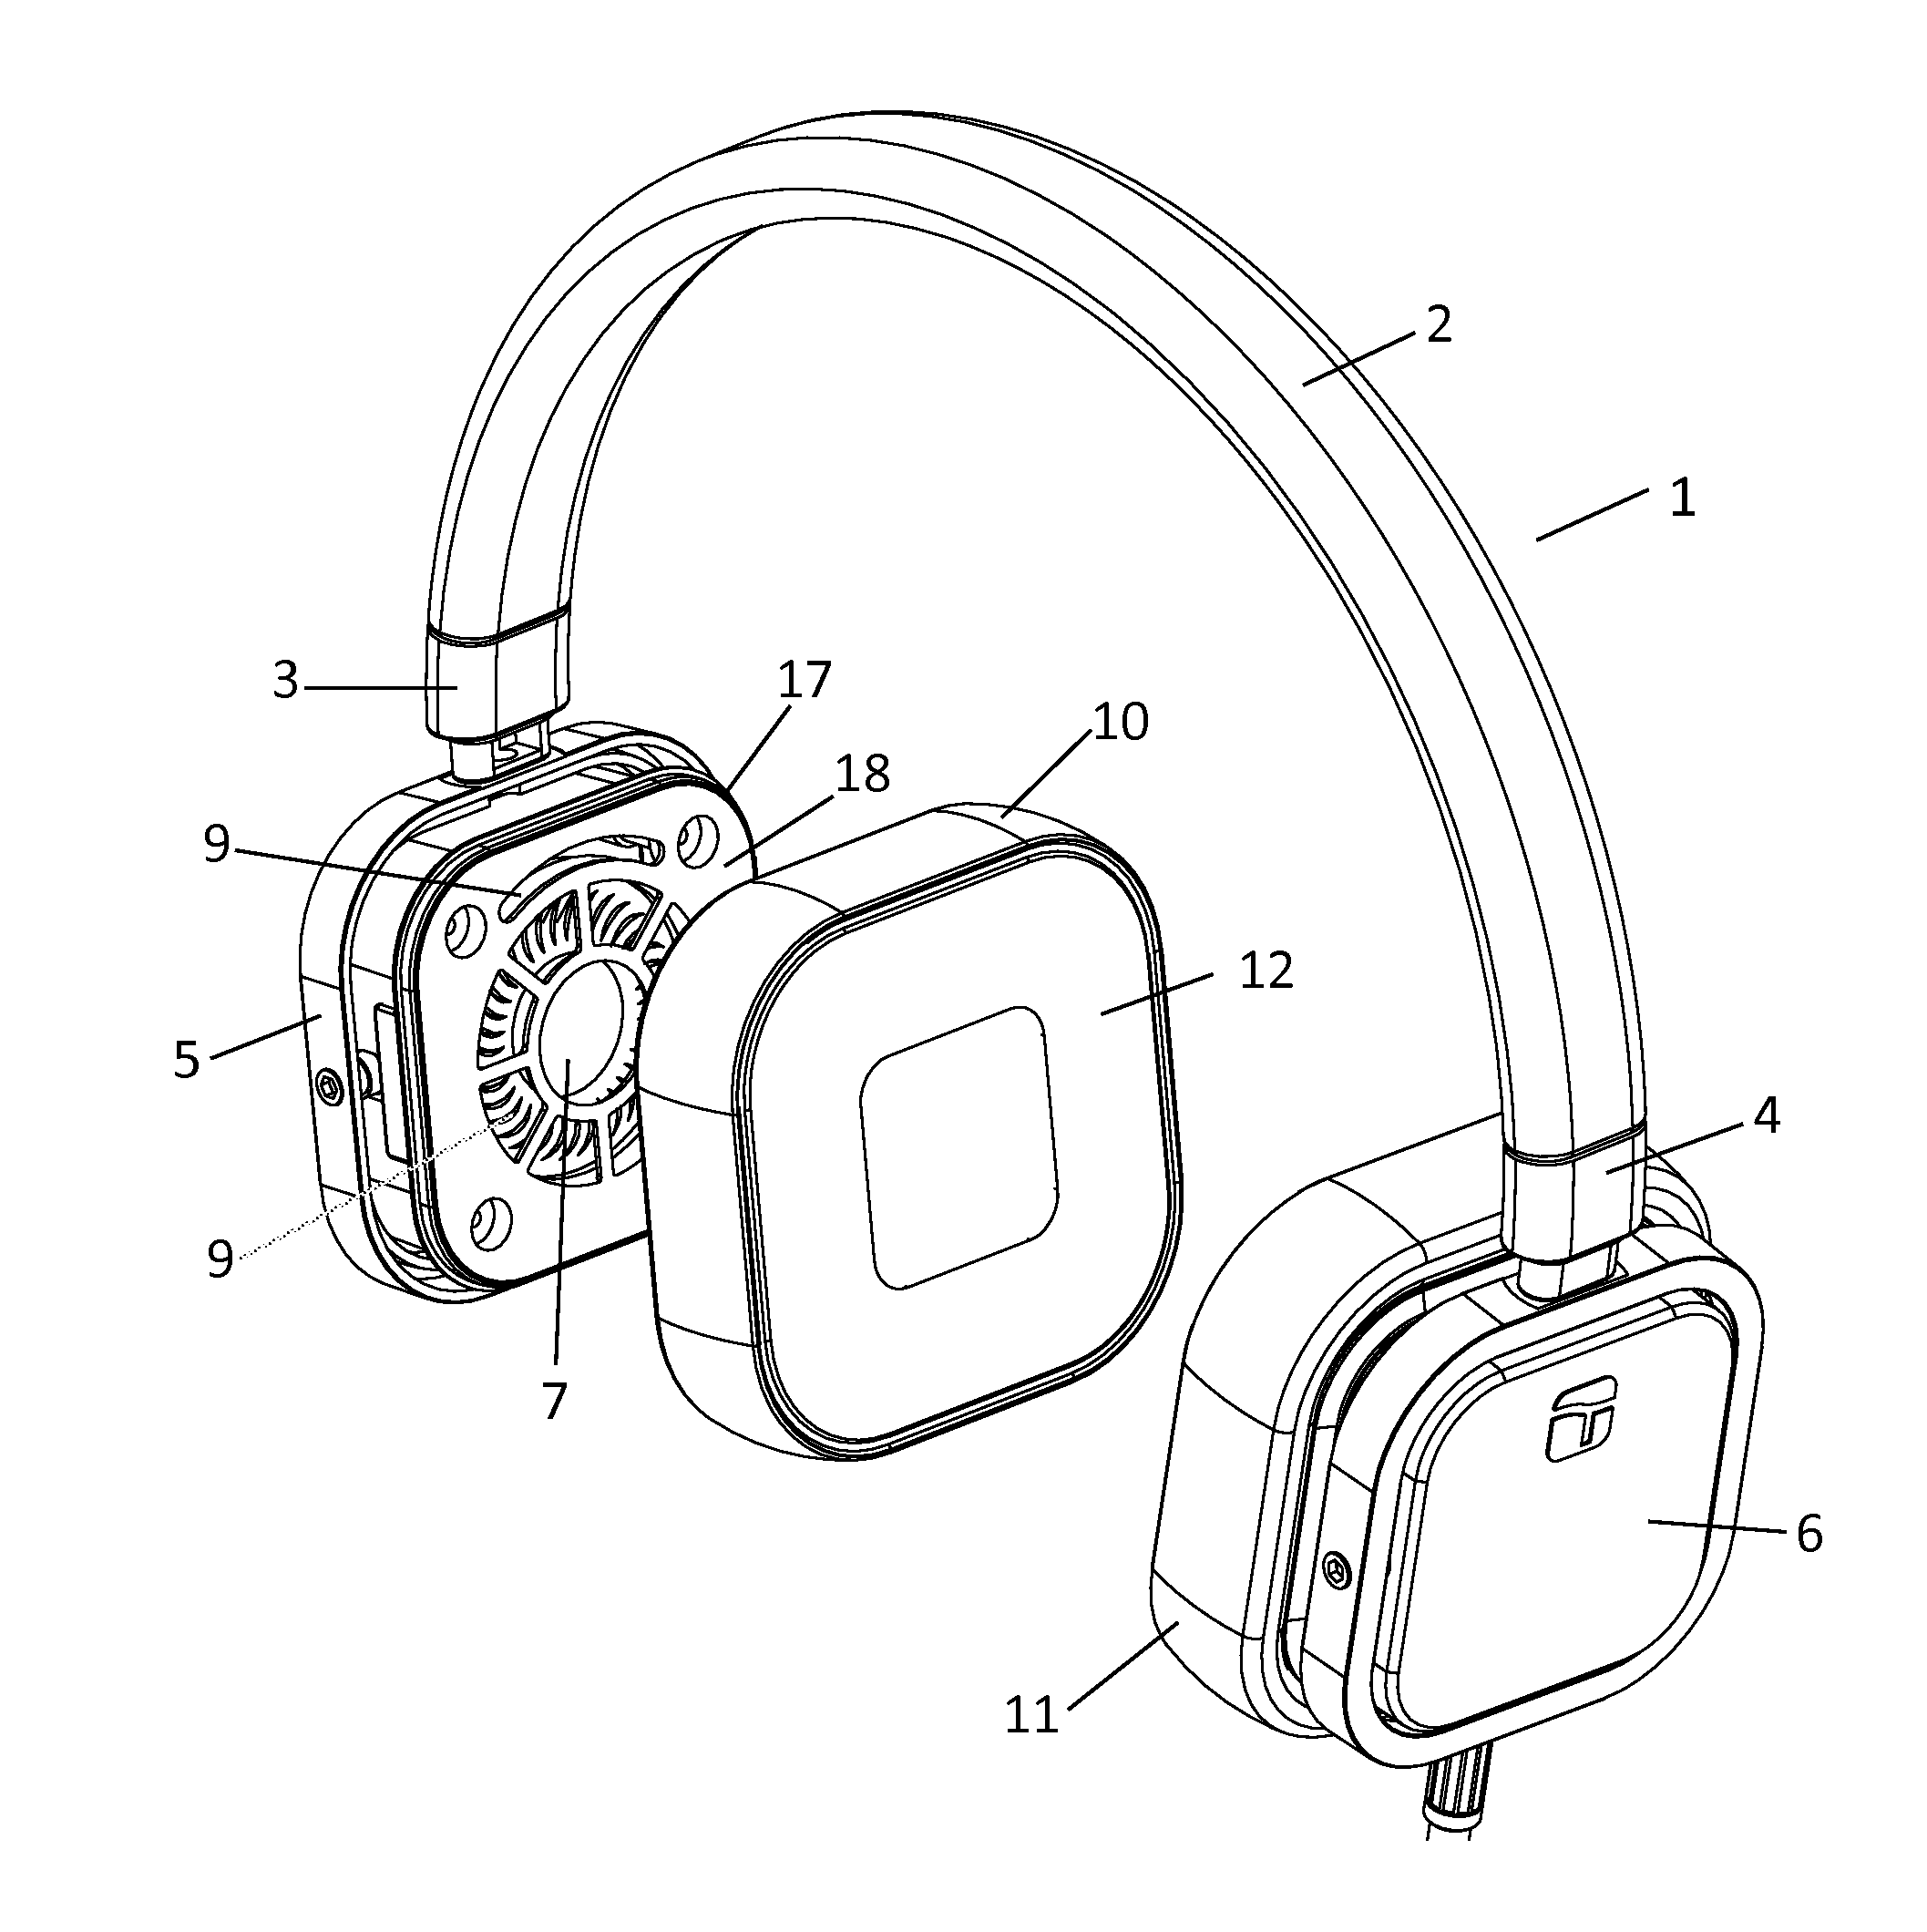 Acoustically tunable headphones